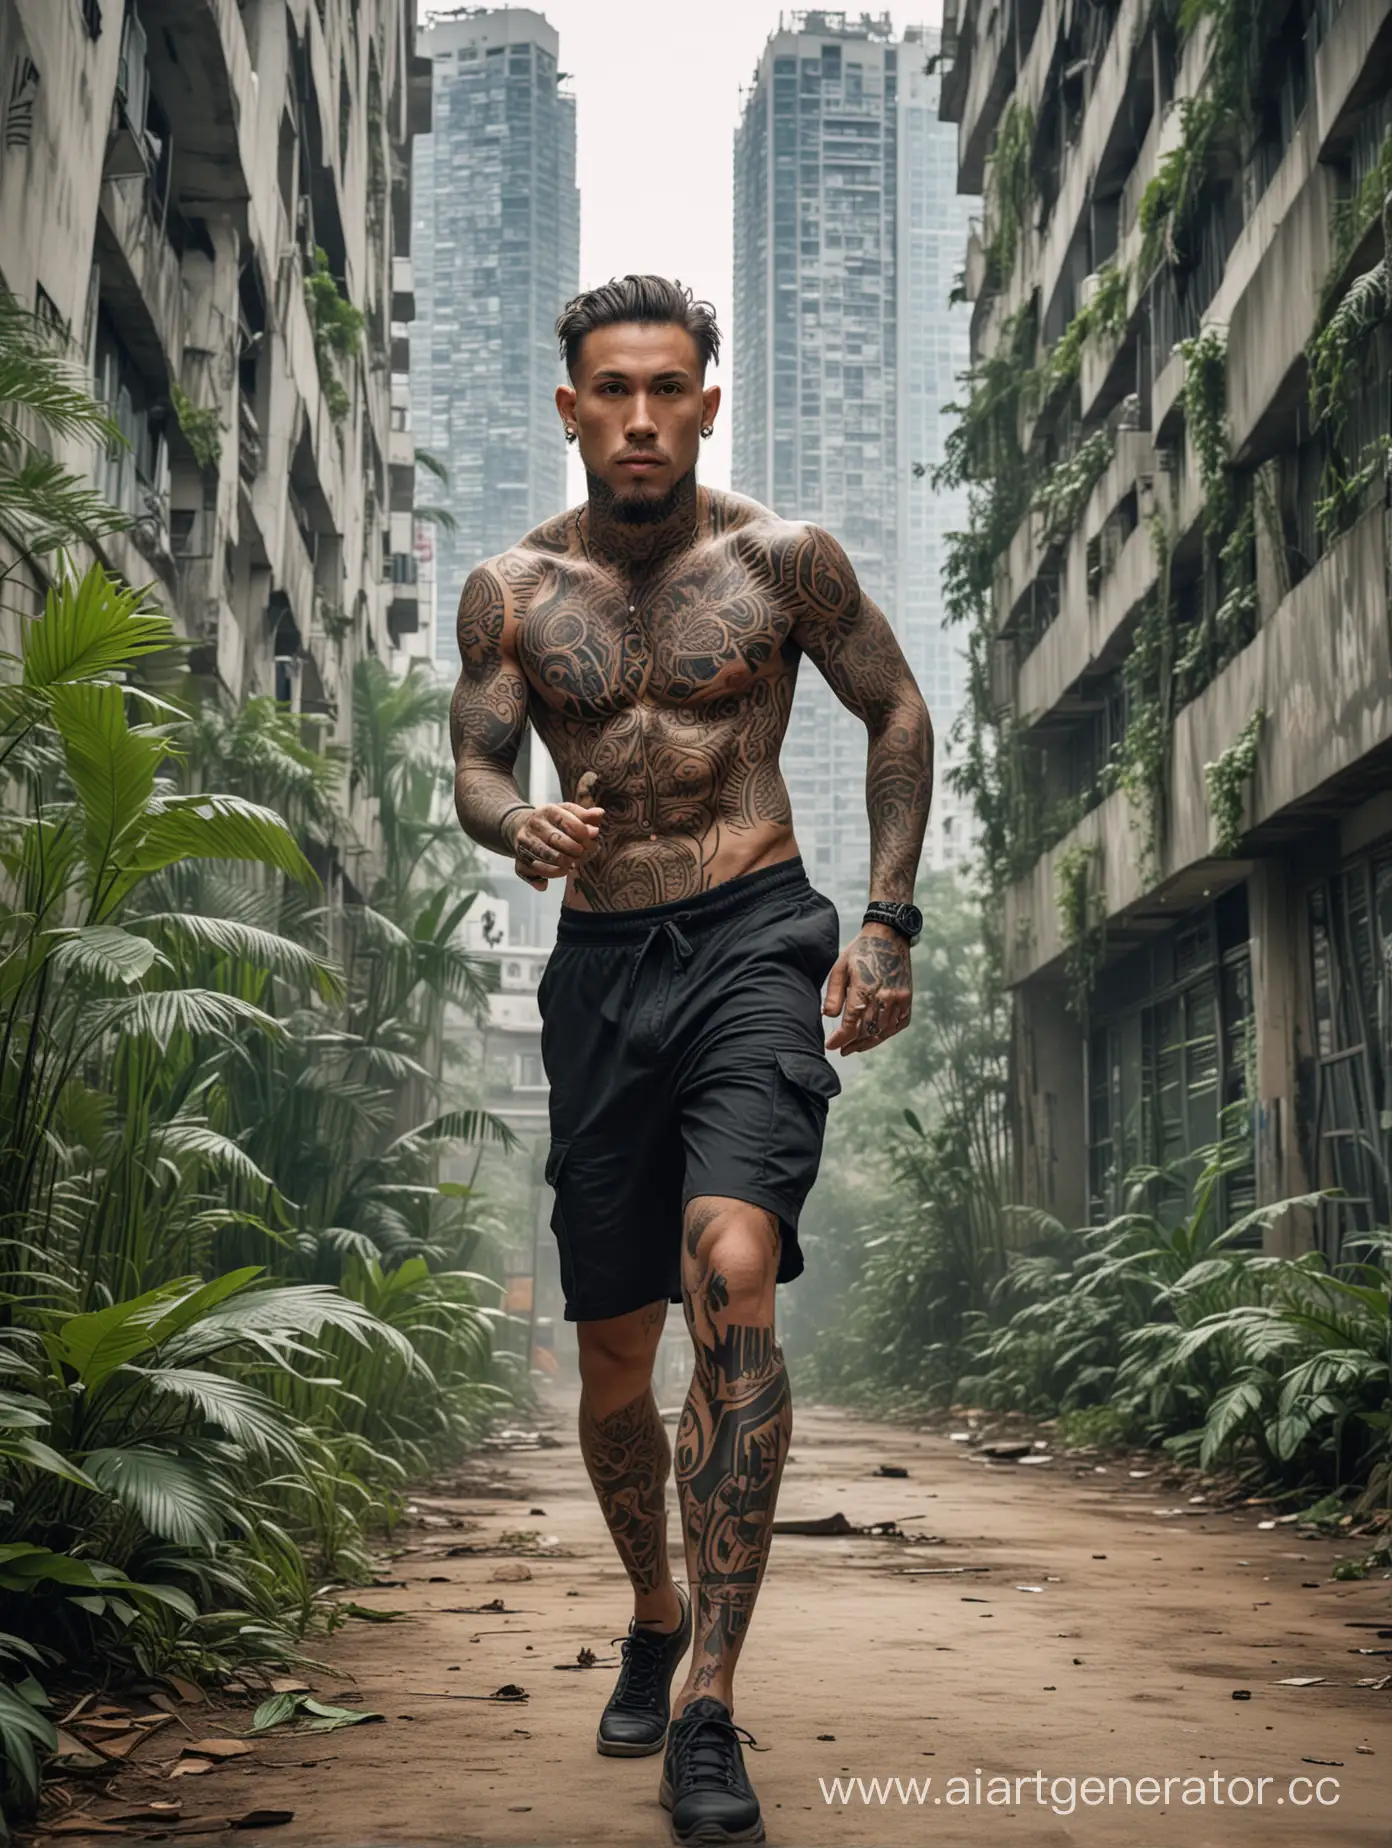 Tattoo-Artist-Running-through-Jungle-with-Urban-Skyline-Background